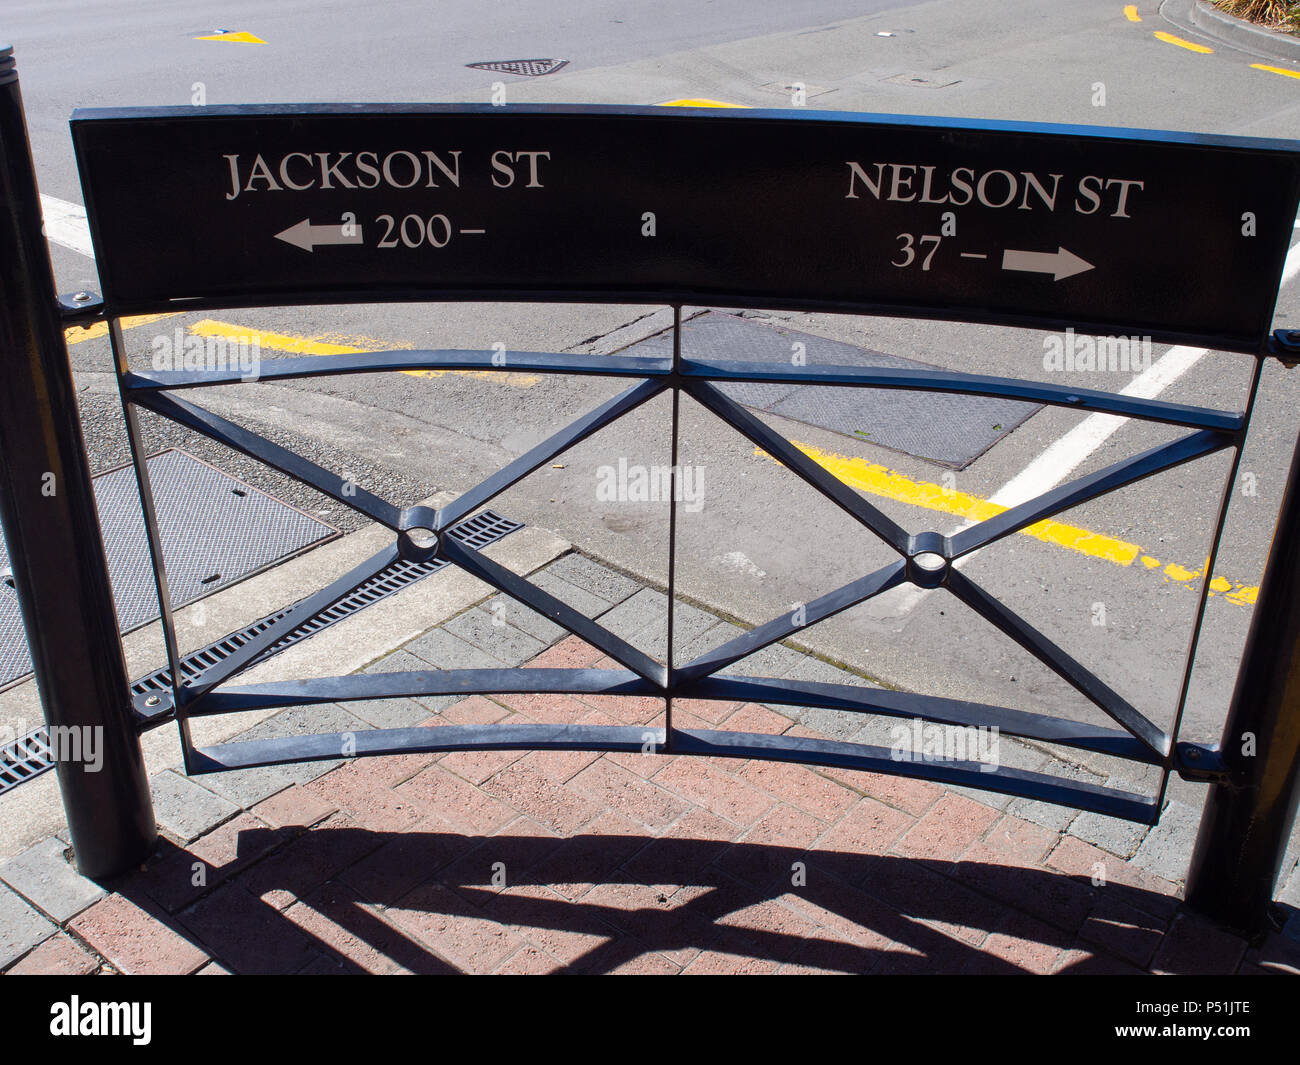 Signo de la calle Jackson Street y Nelson Street en Petone Foto de stock